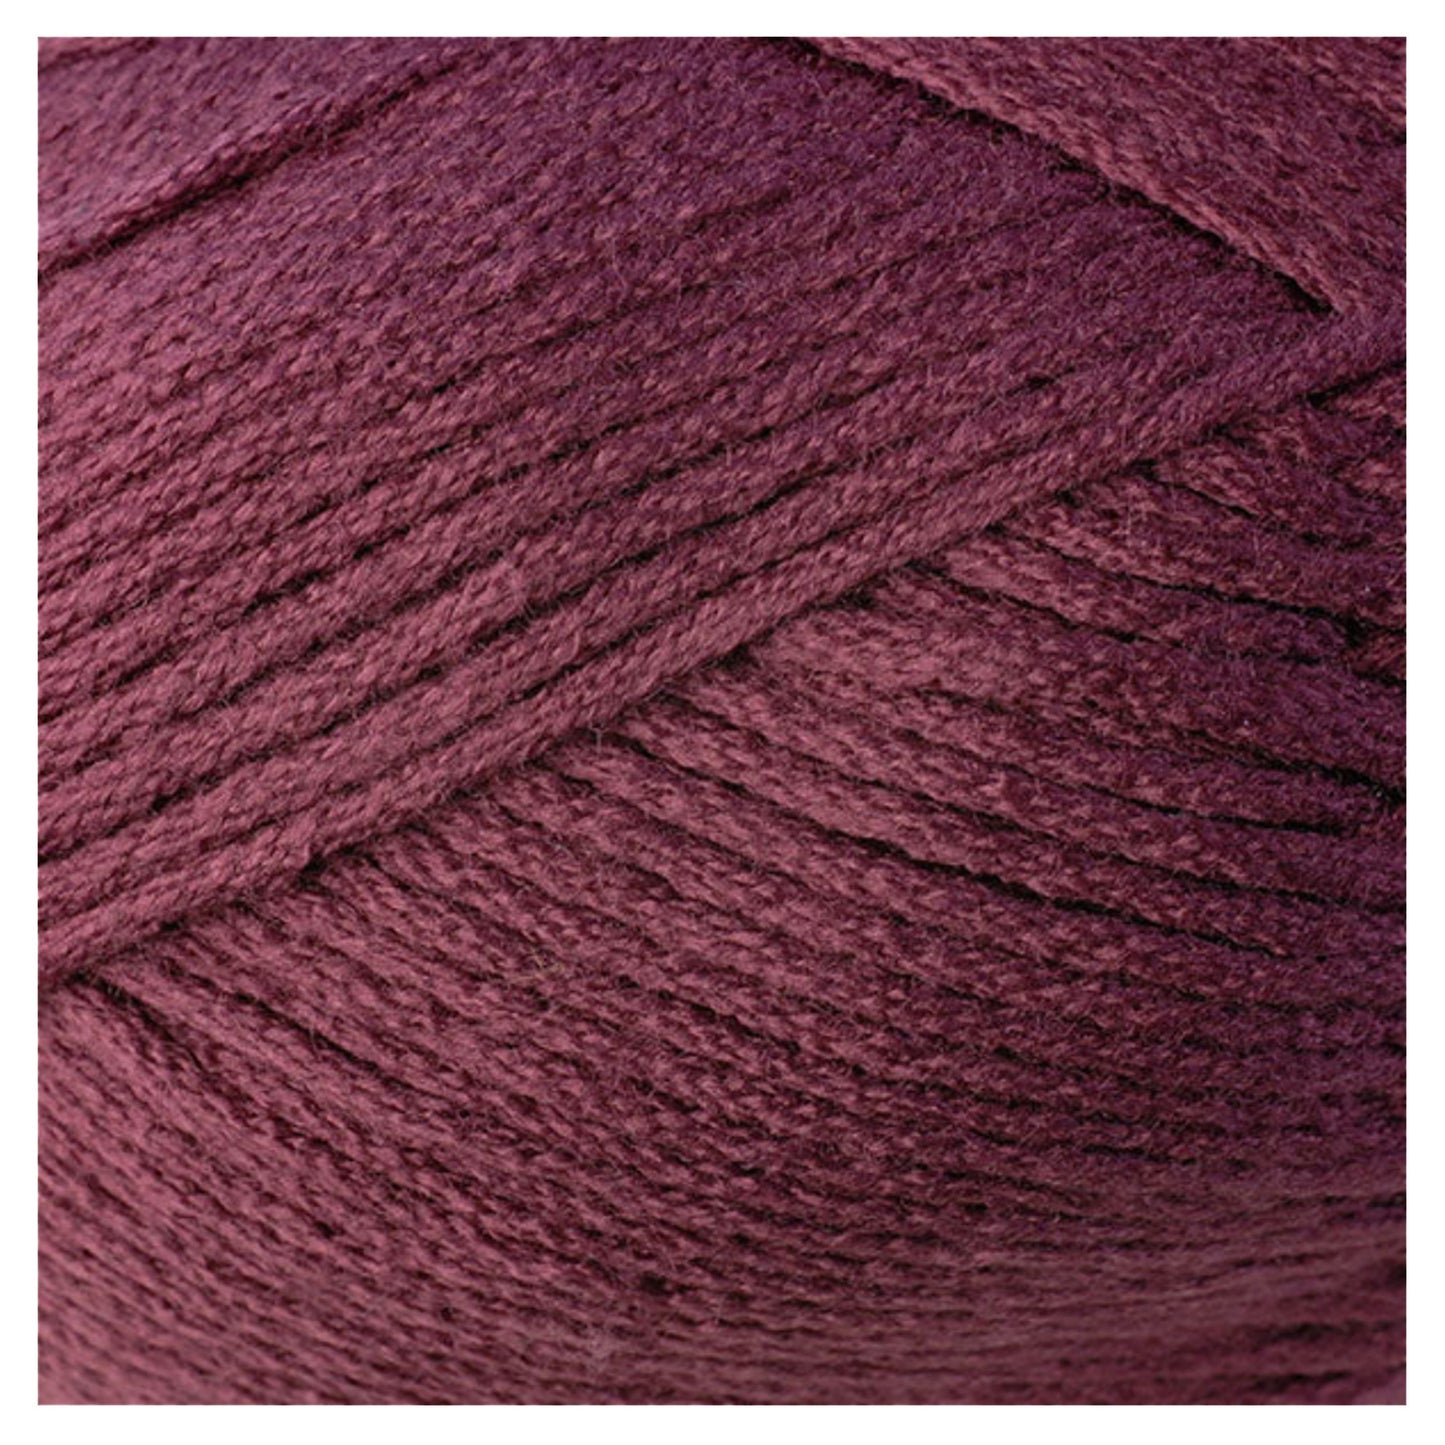 Colorful Crochet Skirt/Cowl - L/1X/2X/3X/4X - Collegiate Crochet Kit Alternative View #3